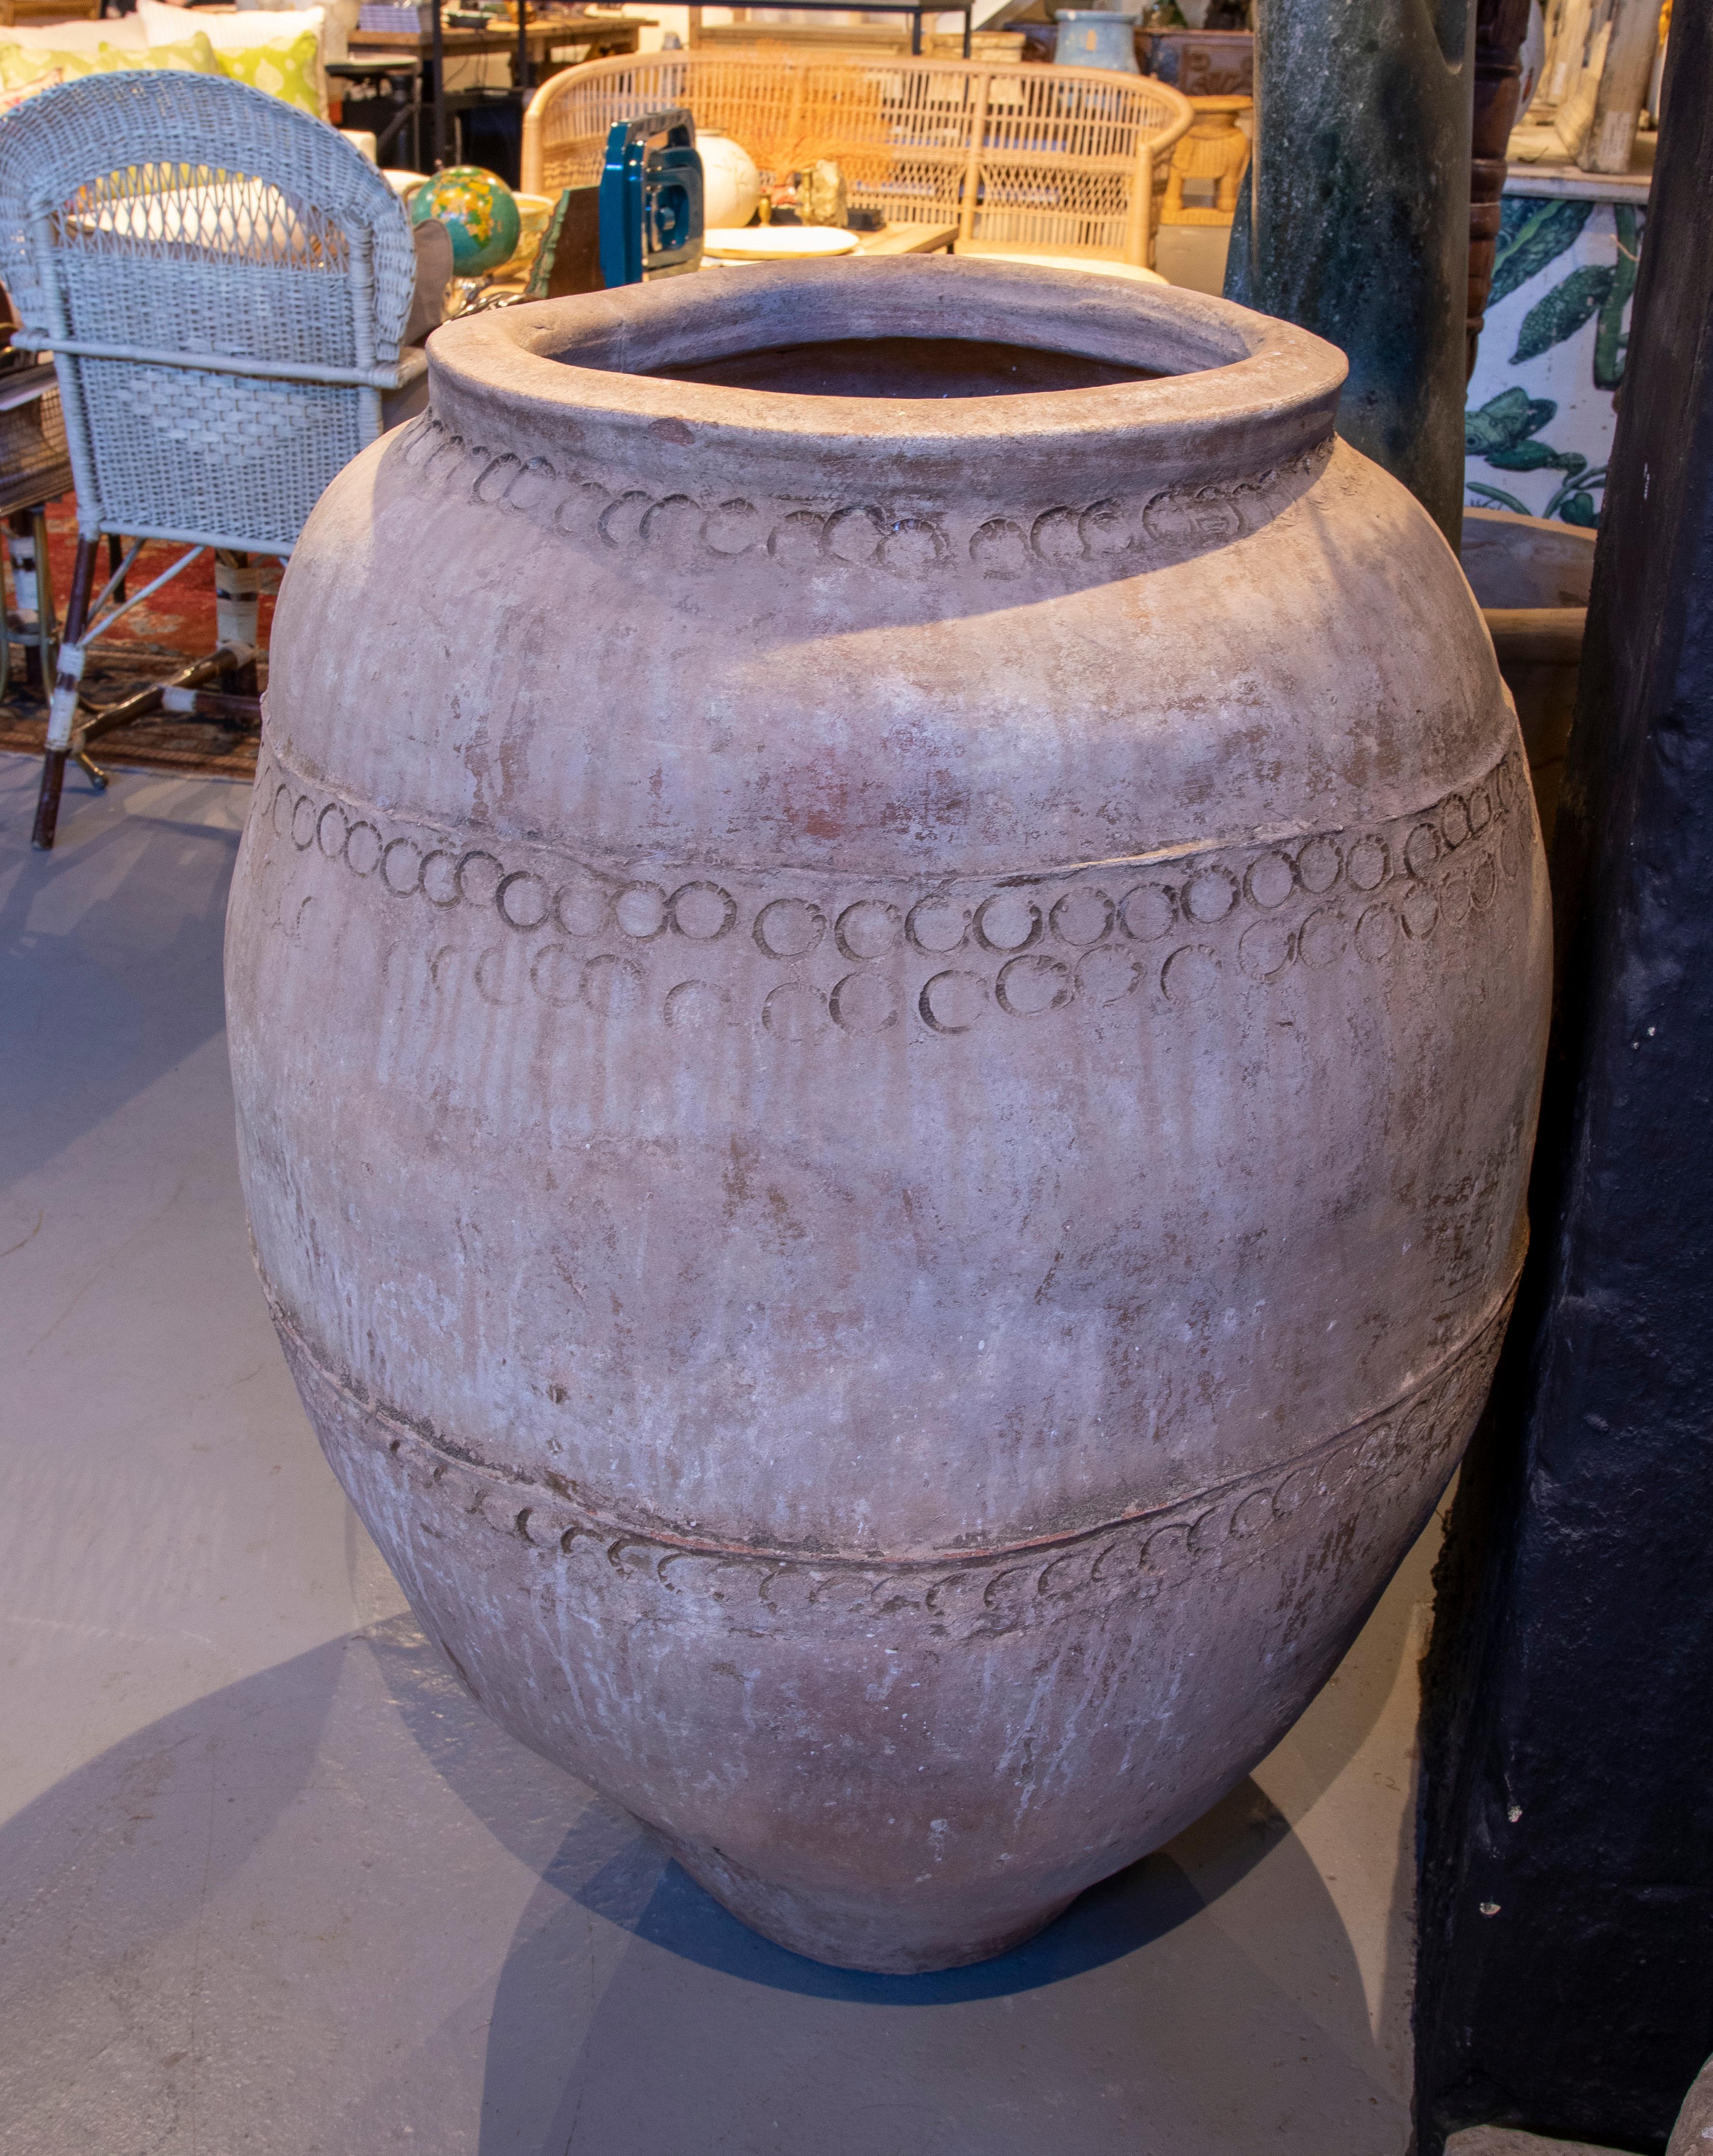 19th Century Spanish Handmade Ceramic Jar with Decorative Borders